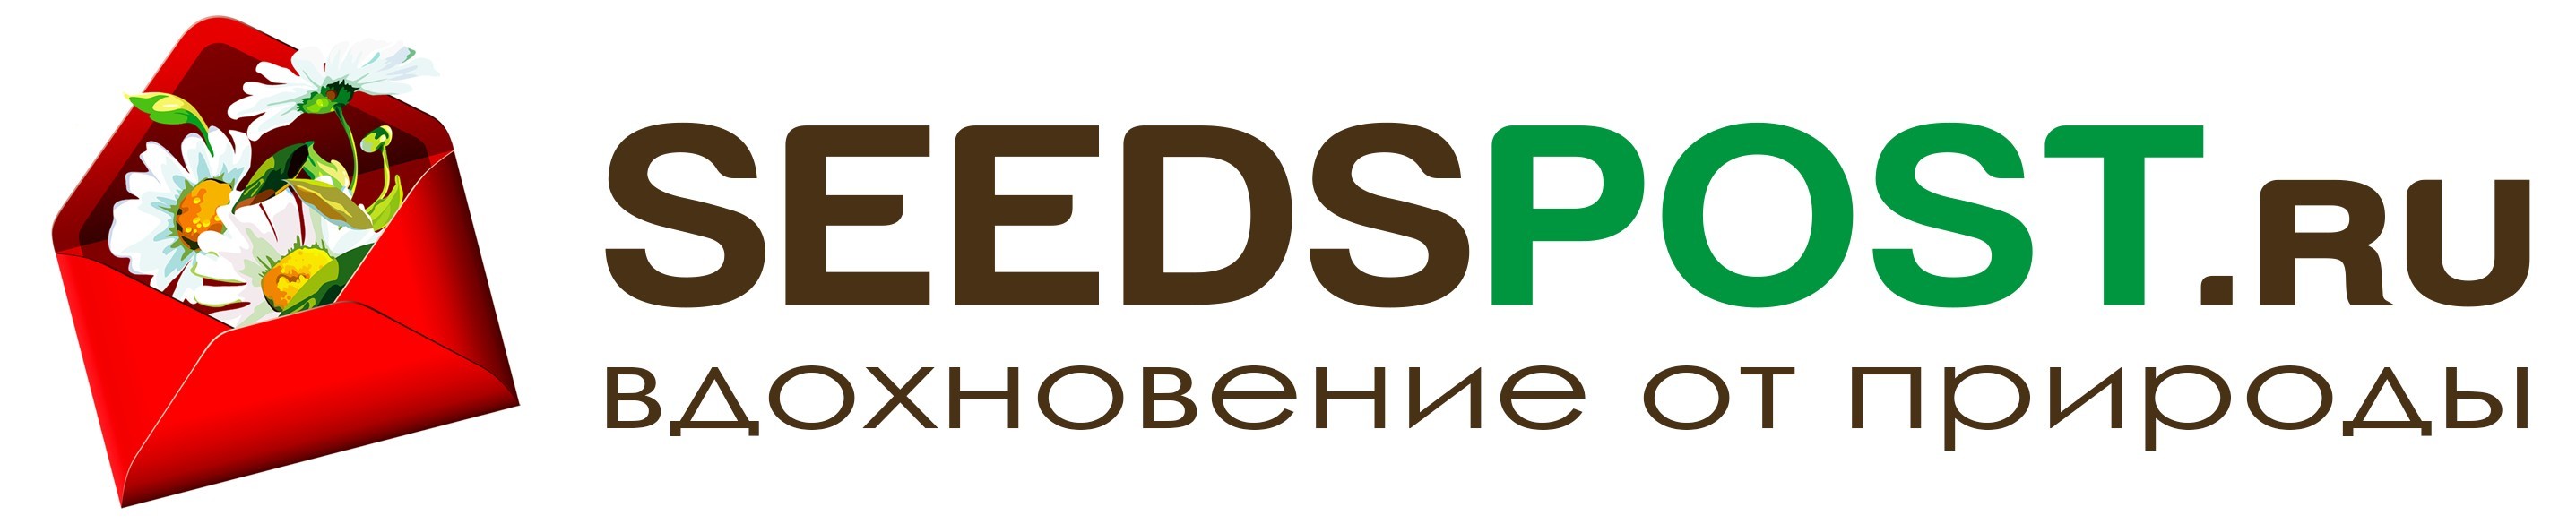 Seedspost.ru